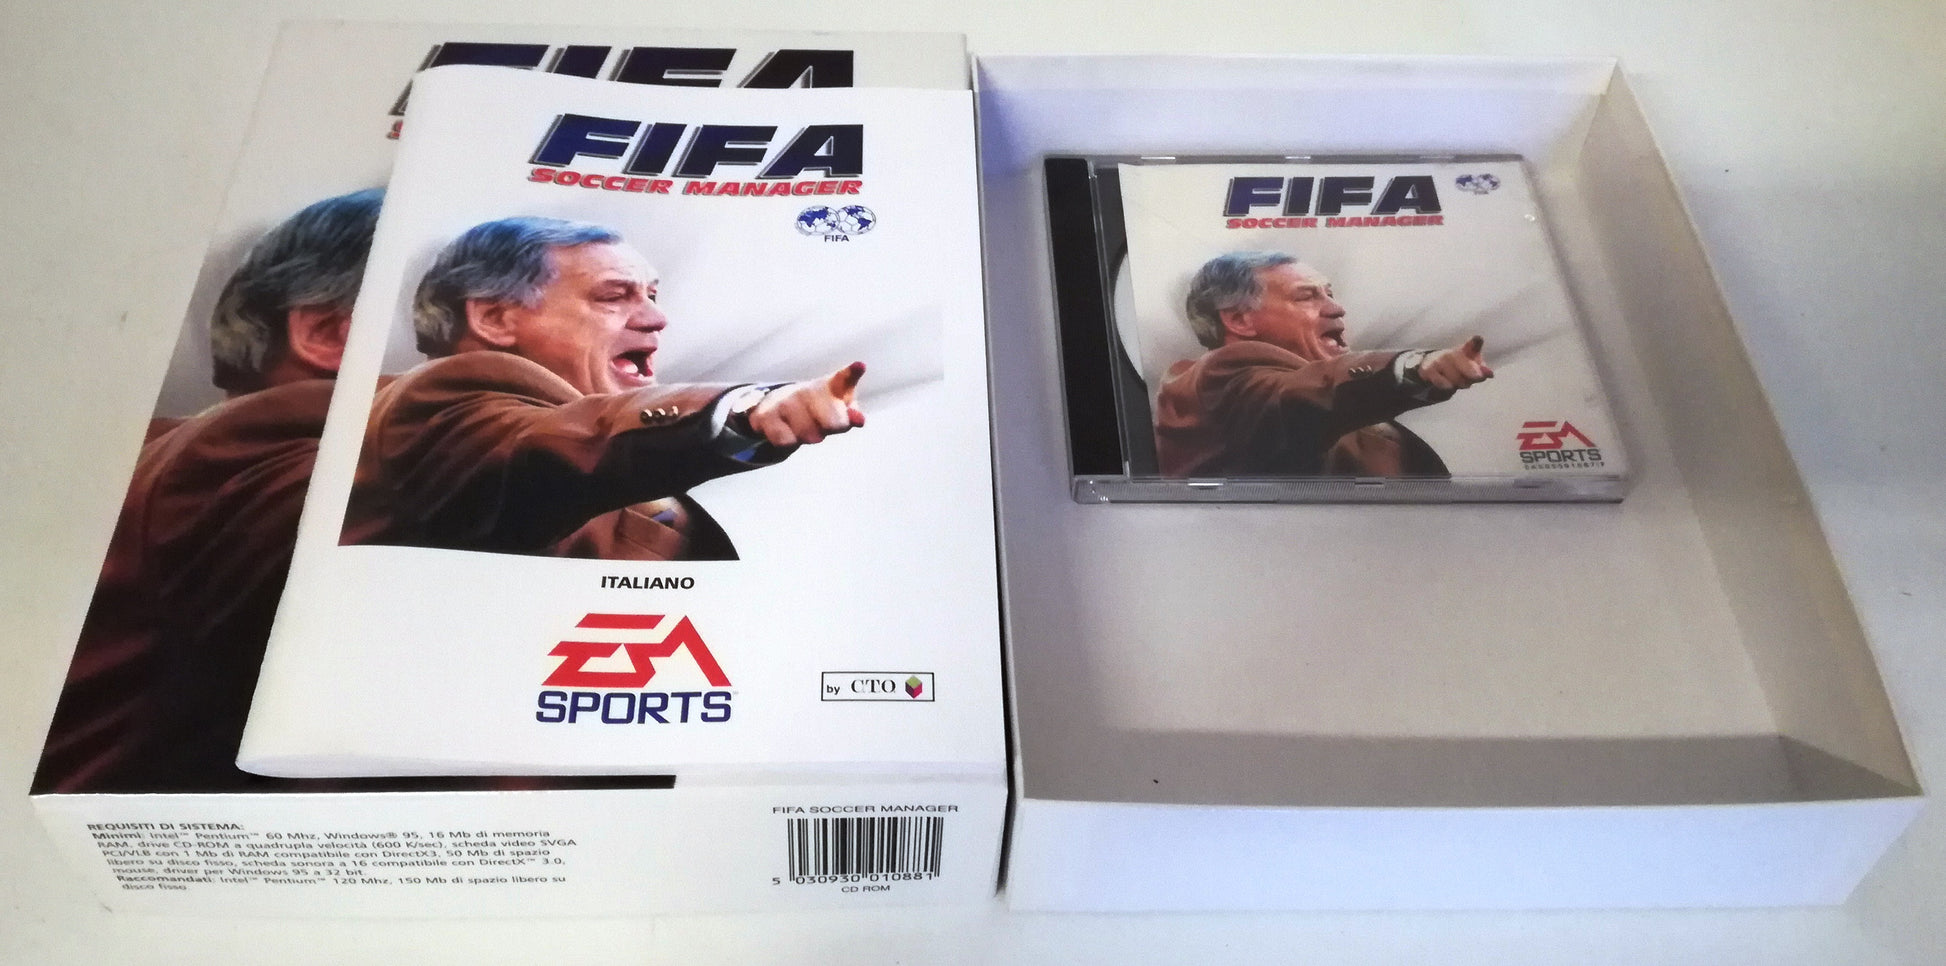 GC- GIOCO PC CD-ROM FIFA SOCCER MANAGER - EM SPORTS WINDOWS 95 - RGZ